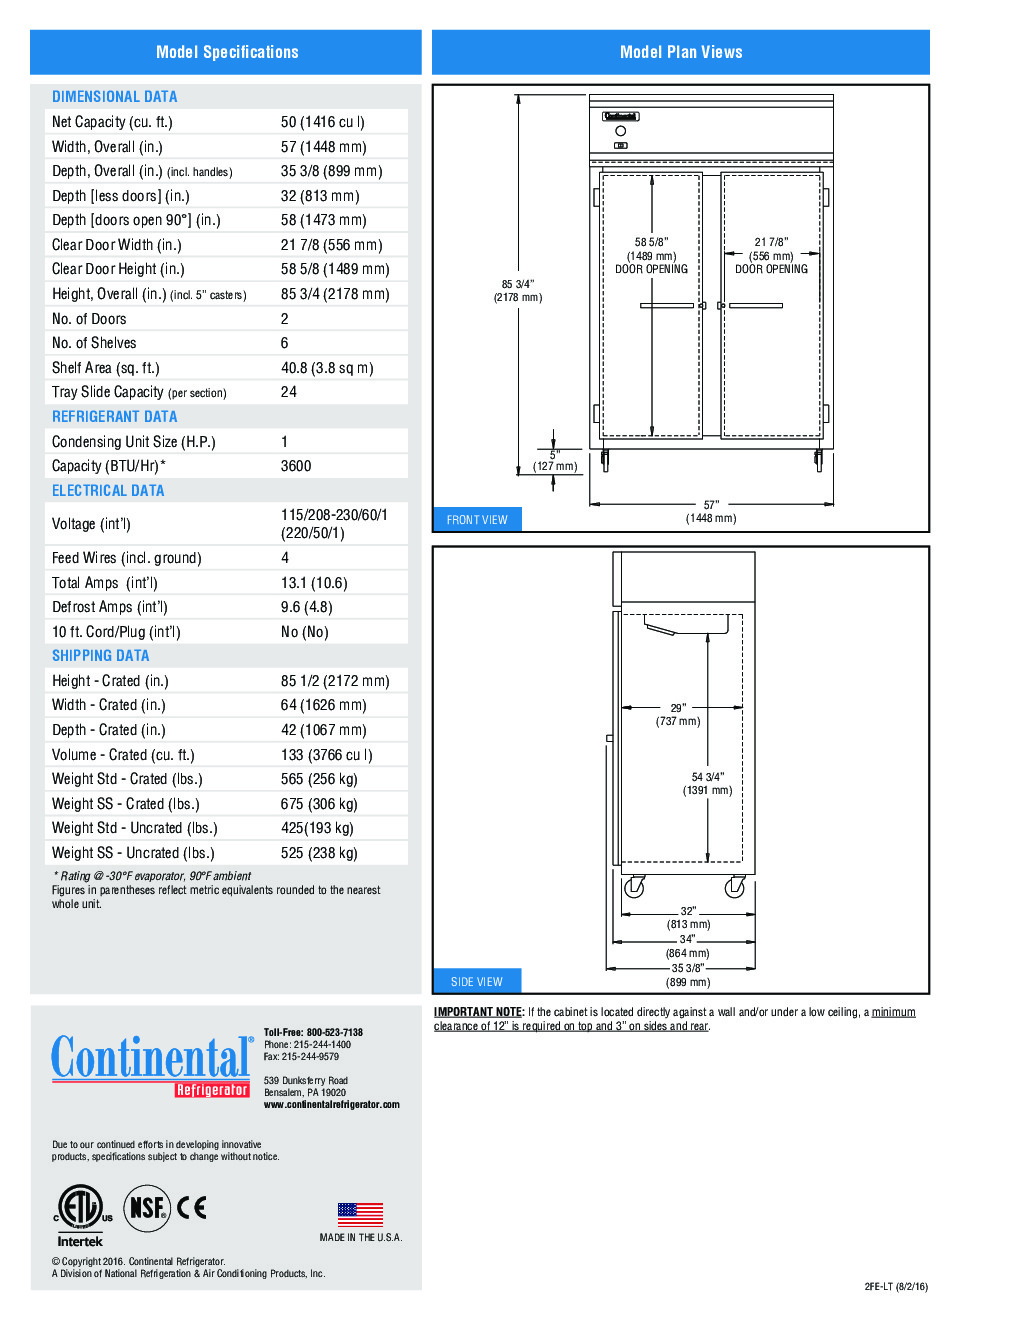 Continental Refrigerator 2FE-LT Reach-In Low Temperature Freezer